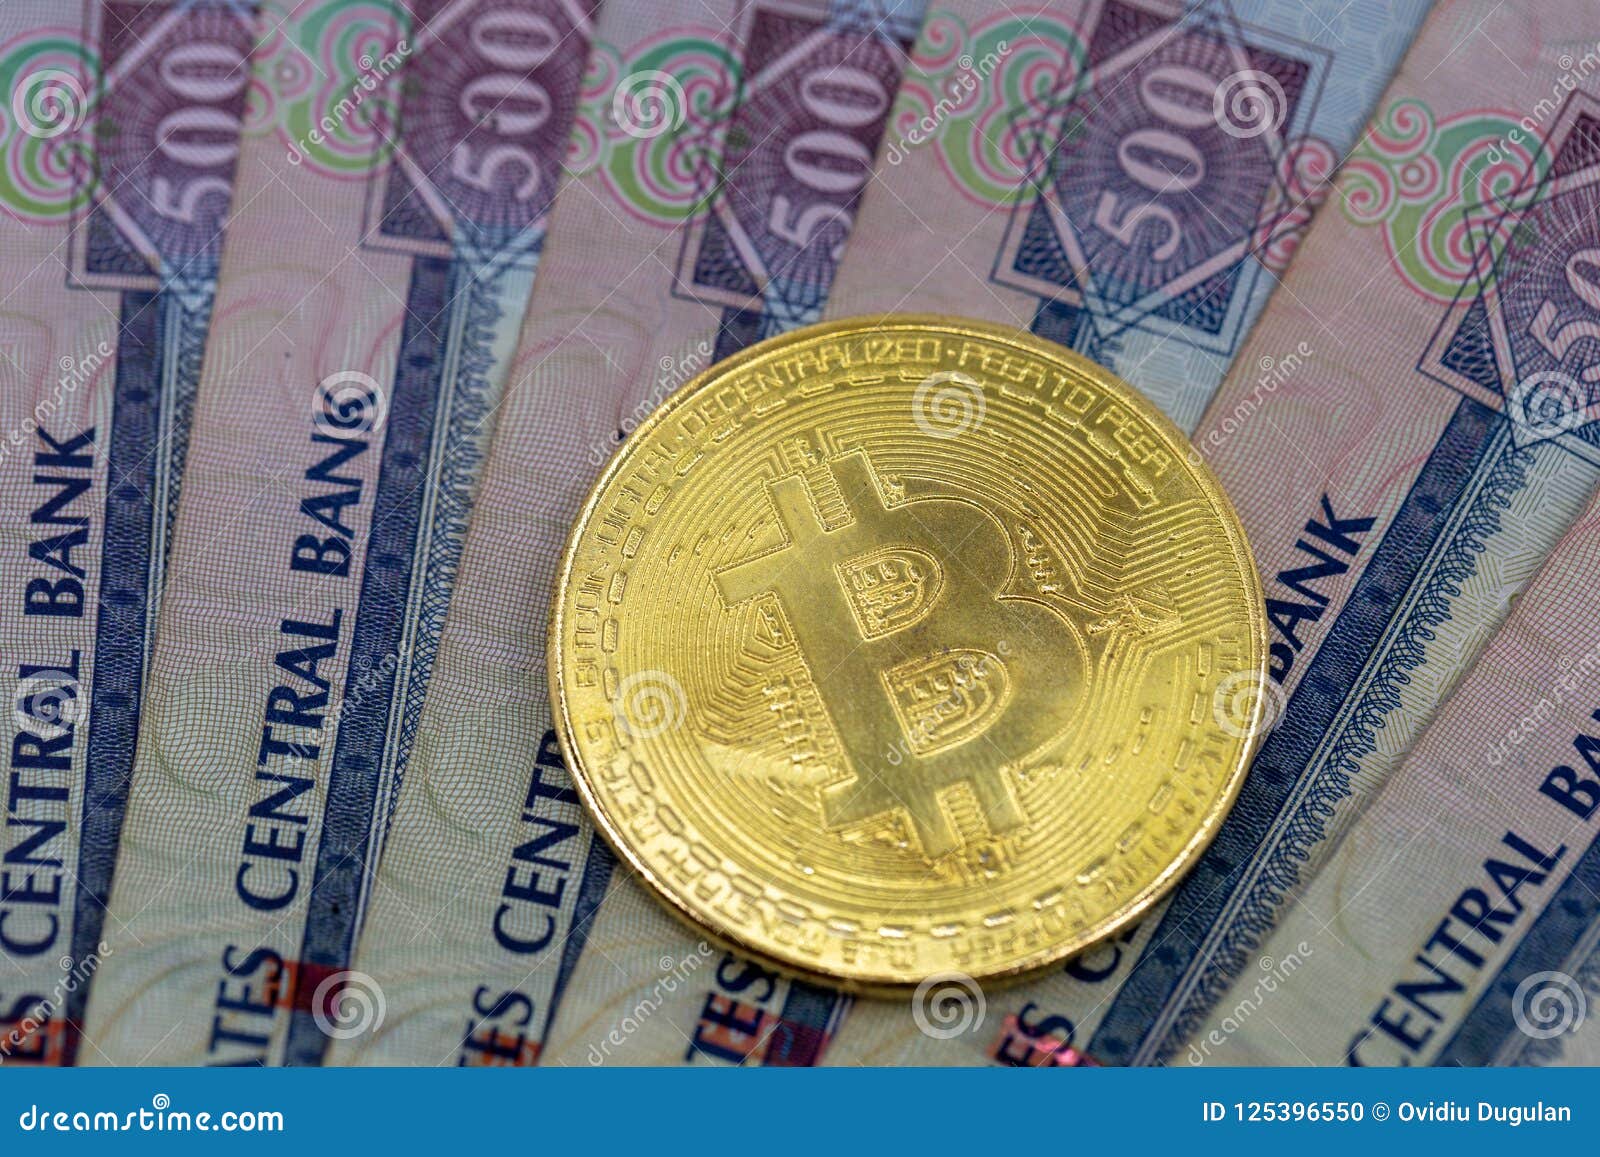 How To Buy Bitcoins With Cash In Dubai | Earn 1 Bitcoin Daily